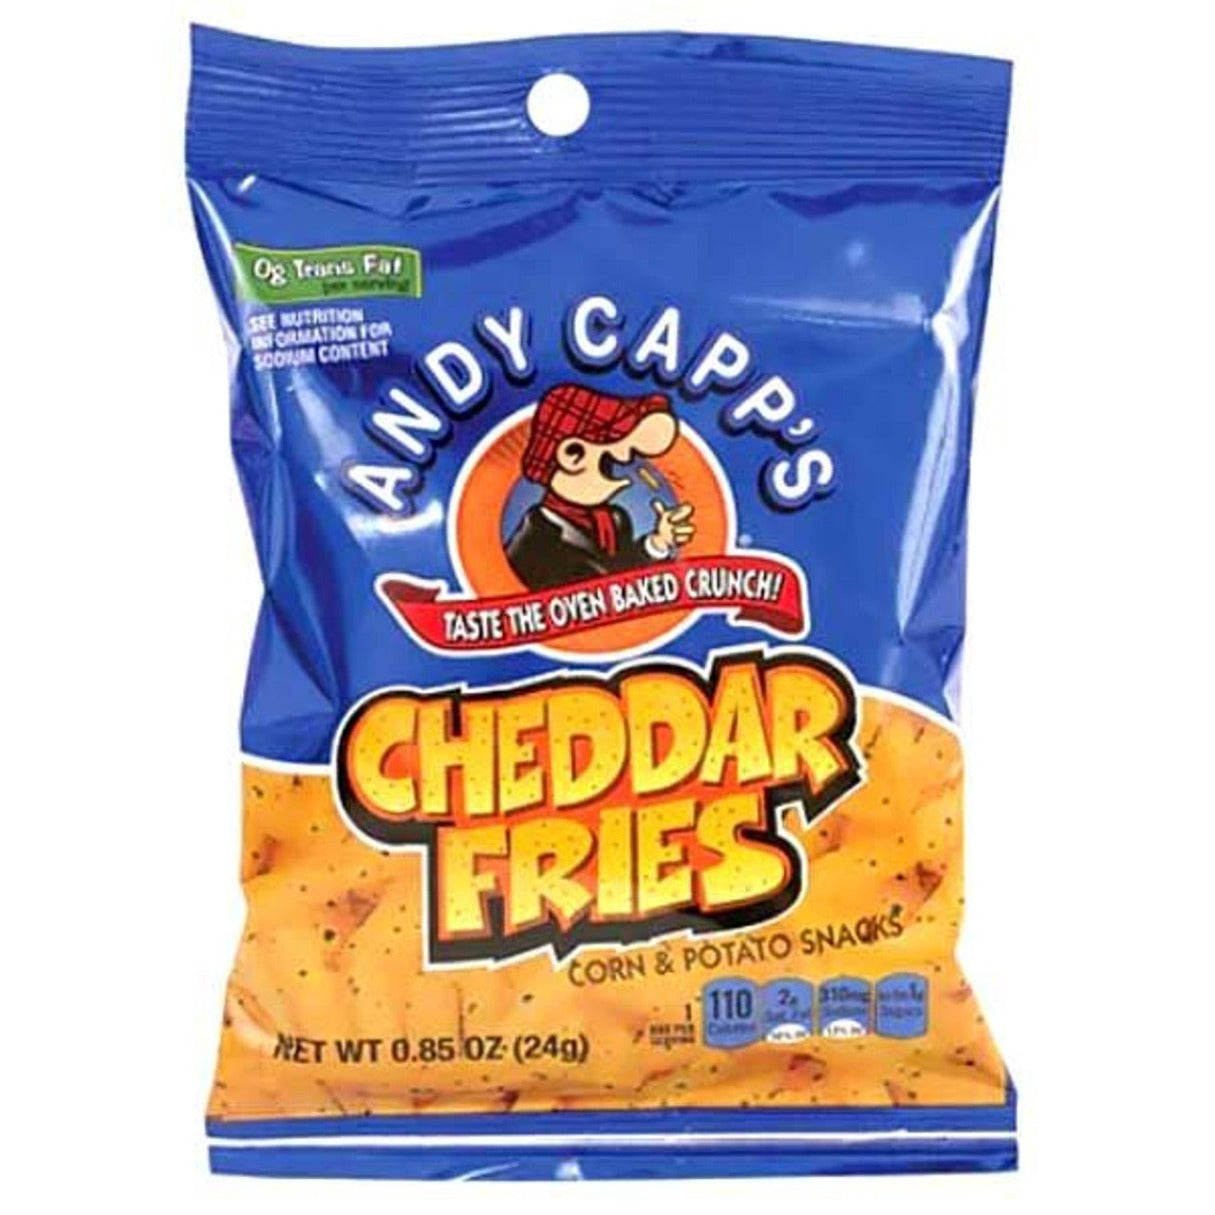 Andy Capp's Cheddar Fries Bag .85oz - 72ct